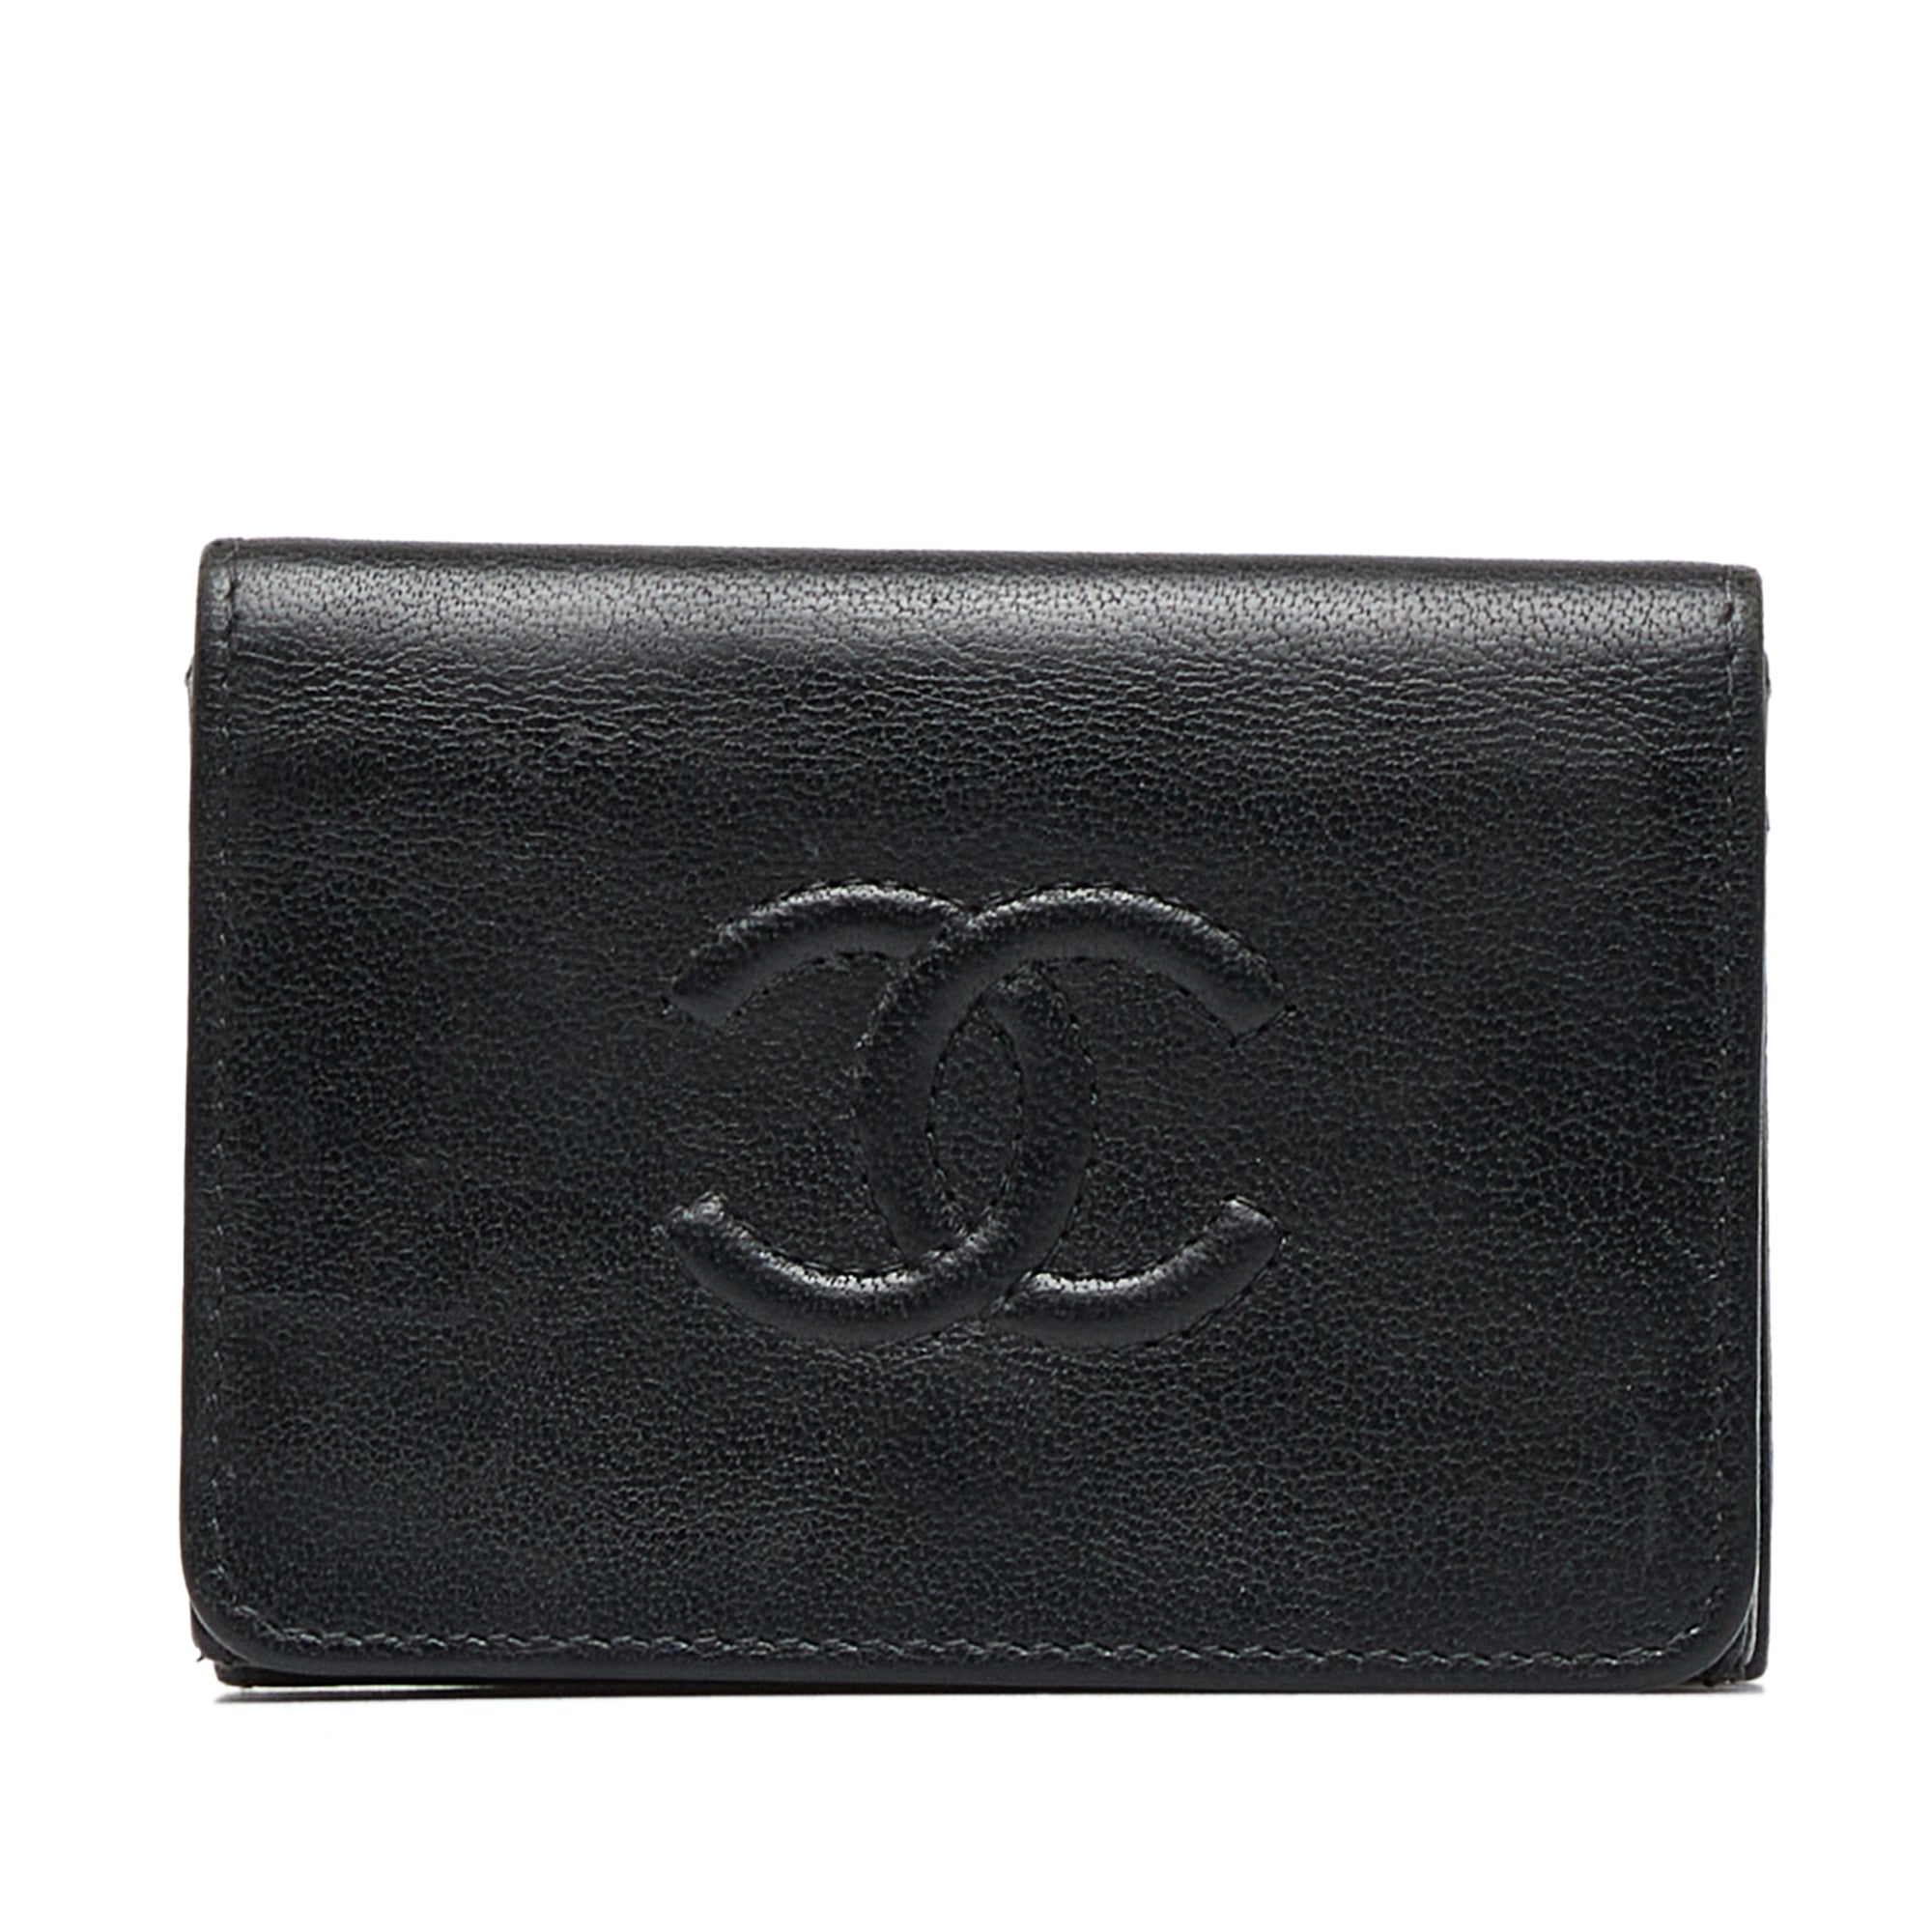 Vintage CHANEL Black Caviar Leather CC Logo Envelope Wallet at